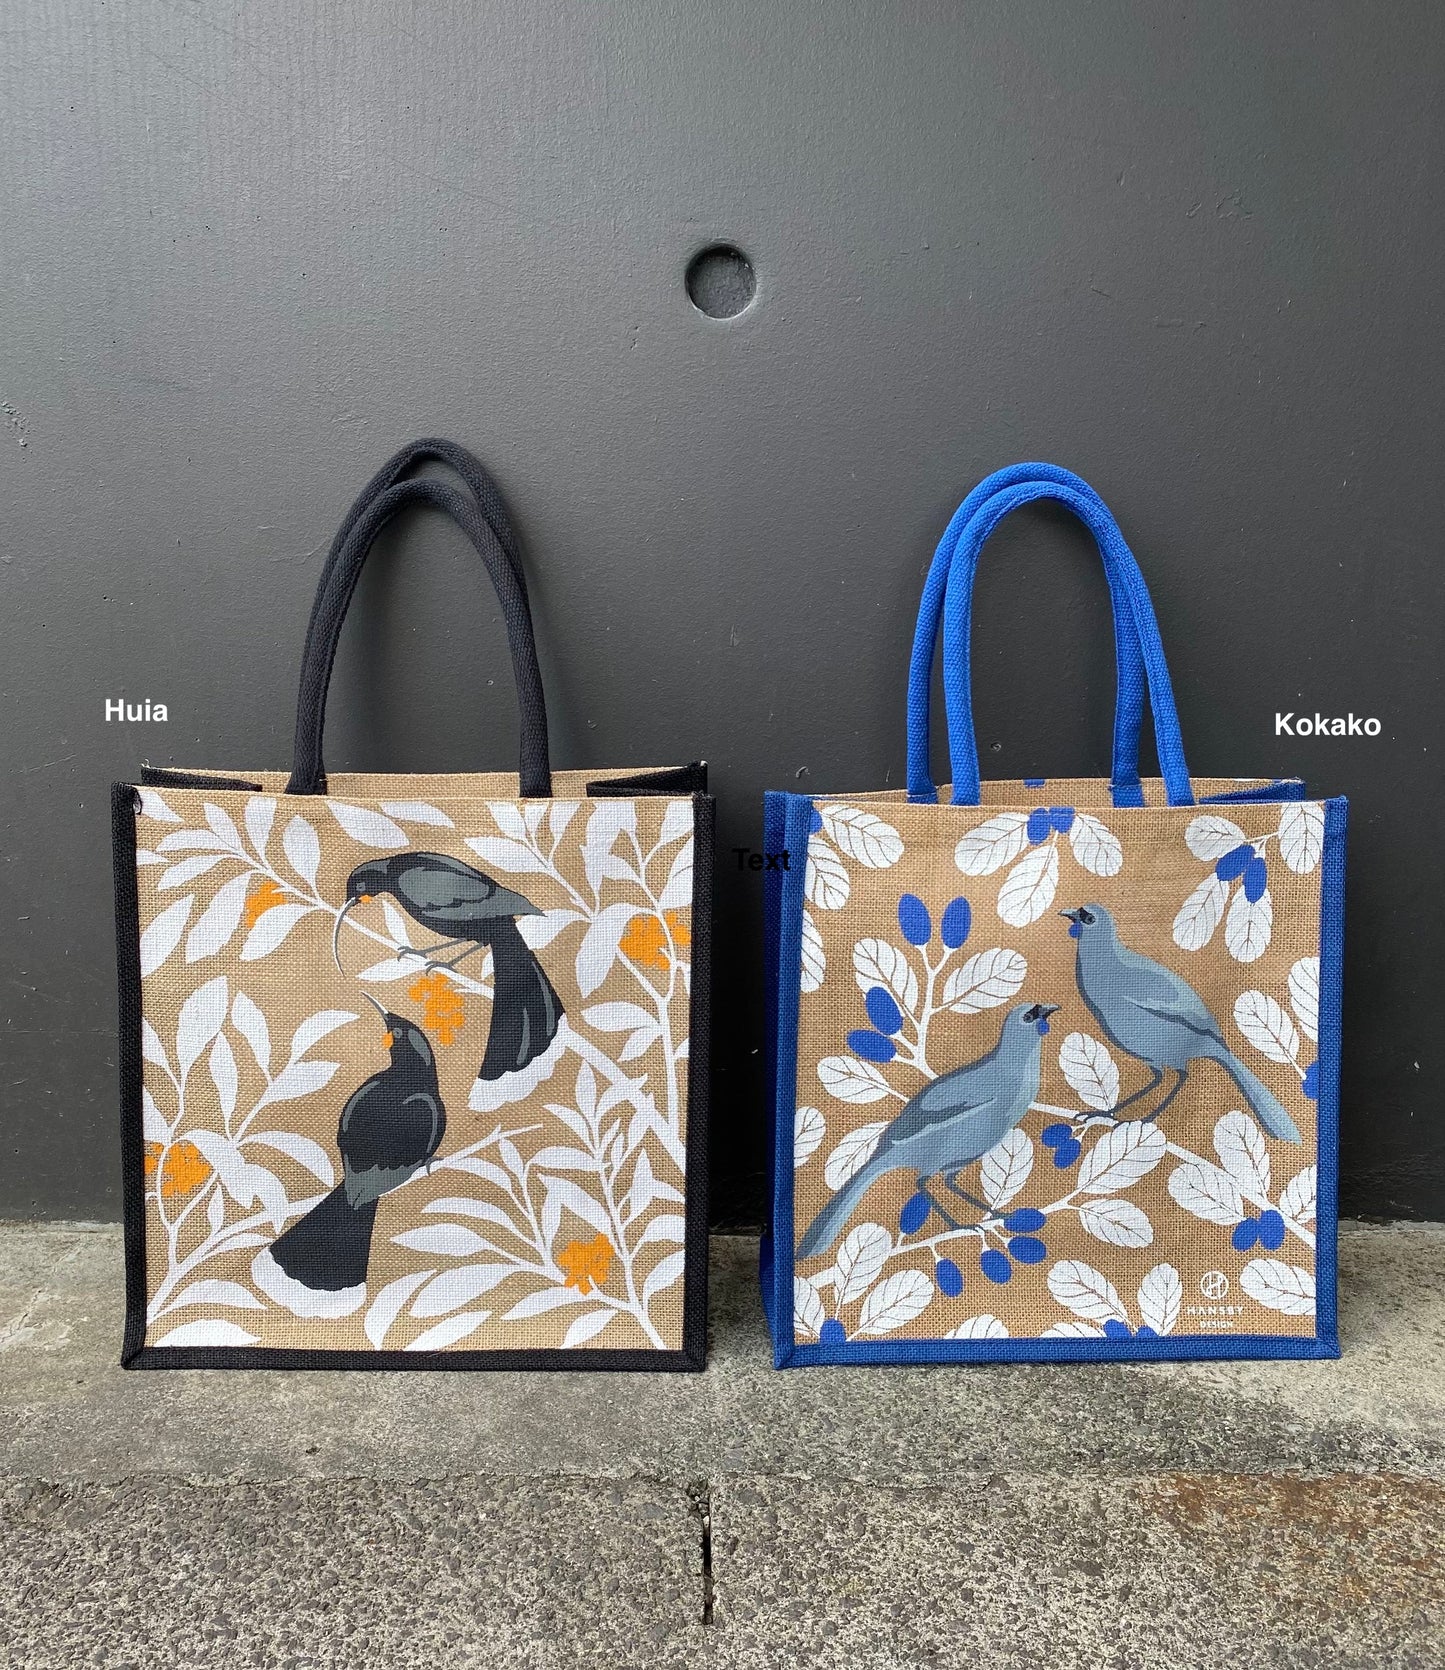 Huia and Kokako jute bags by Hansby Design, New Zealand